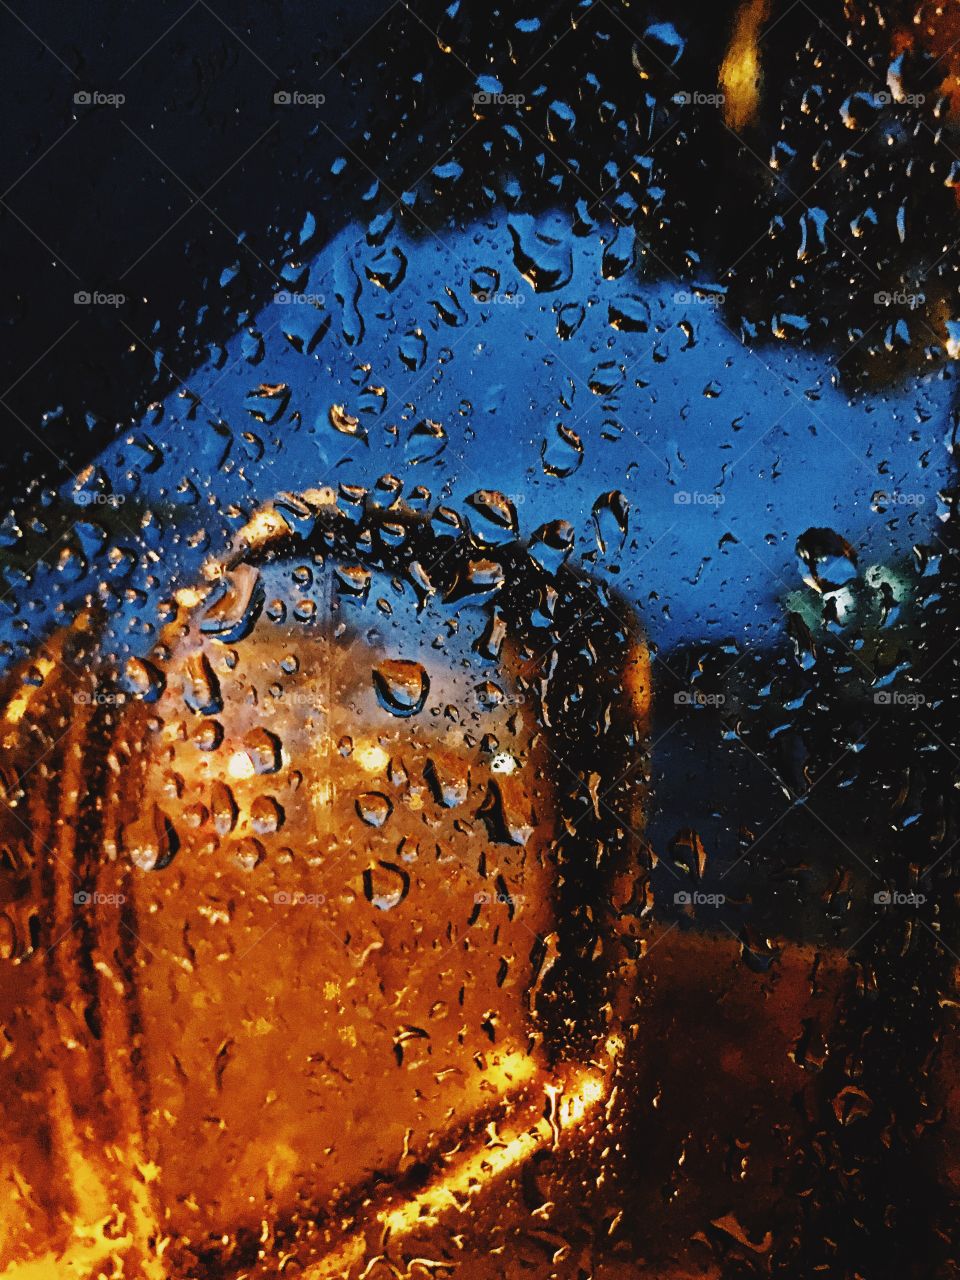 Raindrops on the windows of my car